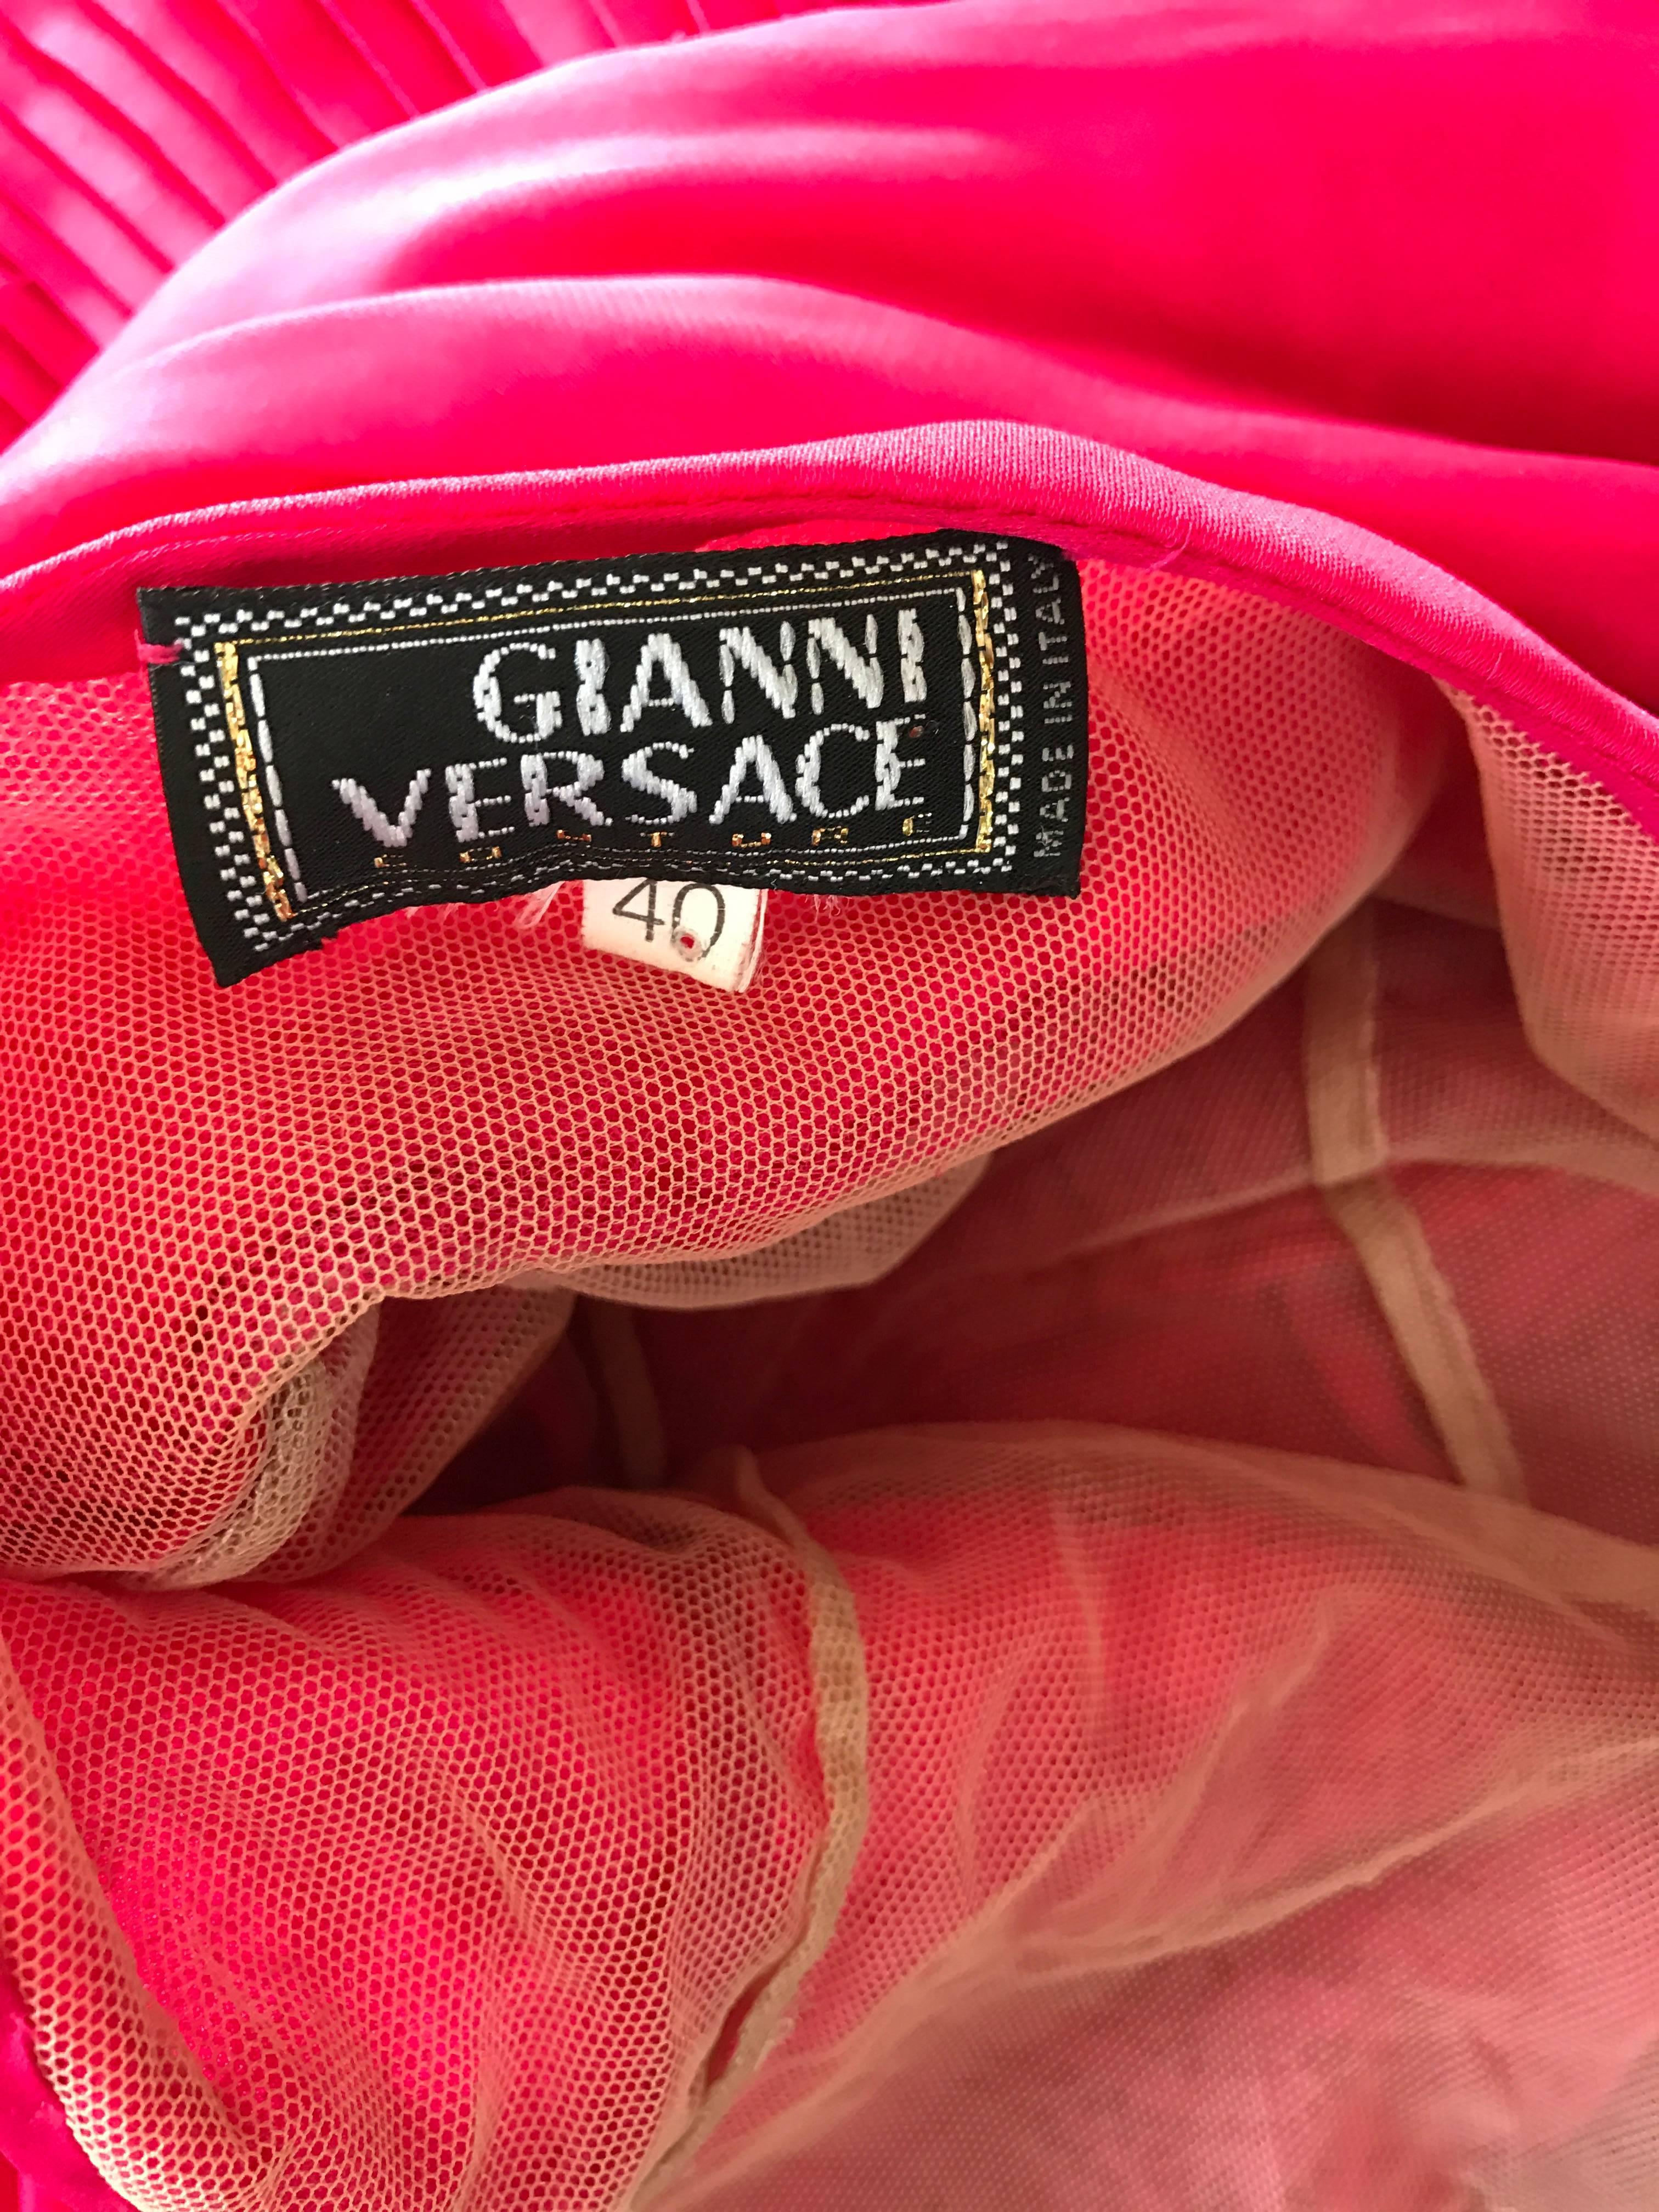 1990s Gianni Versace Couture Hot Pink Fuchsia Silk Vintage 90s Halter Dress  3